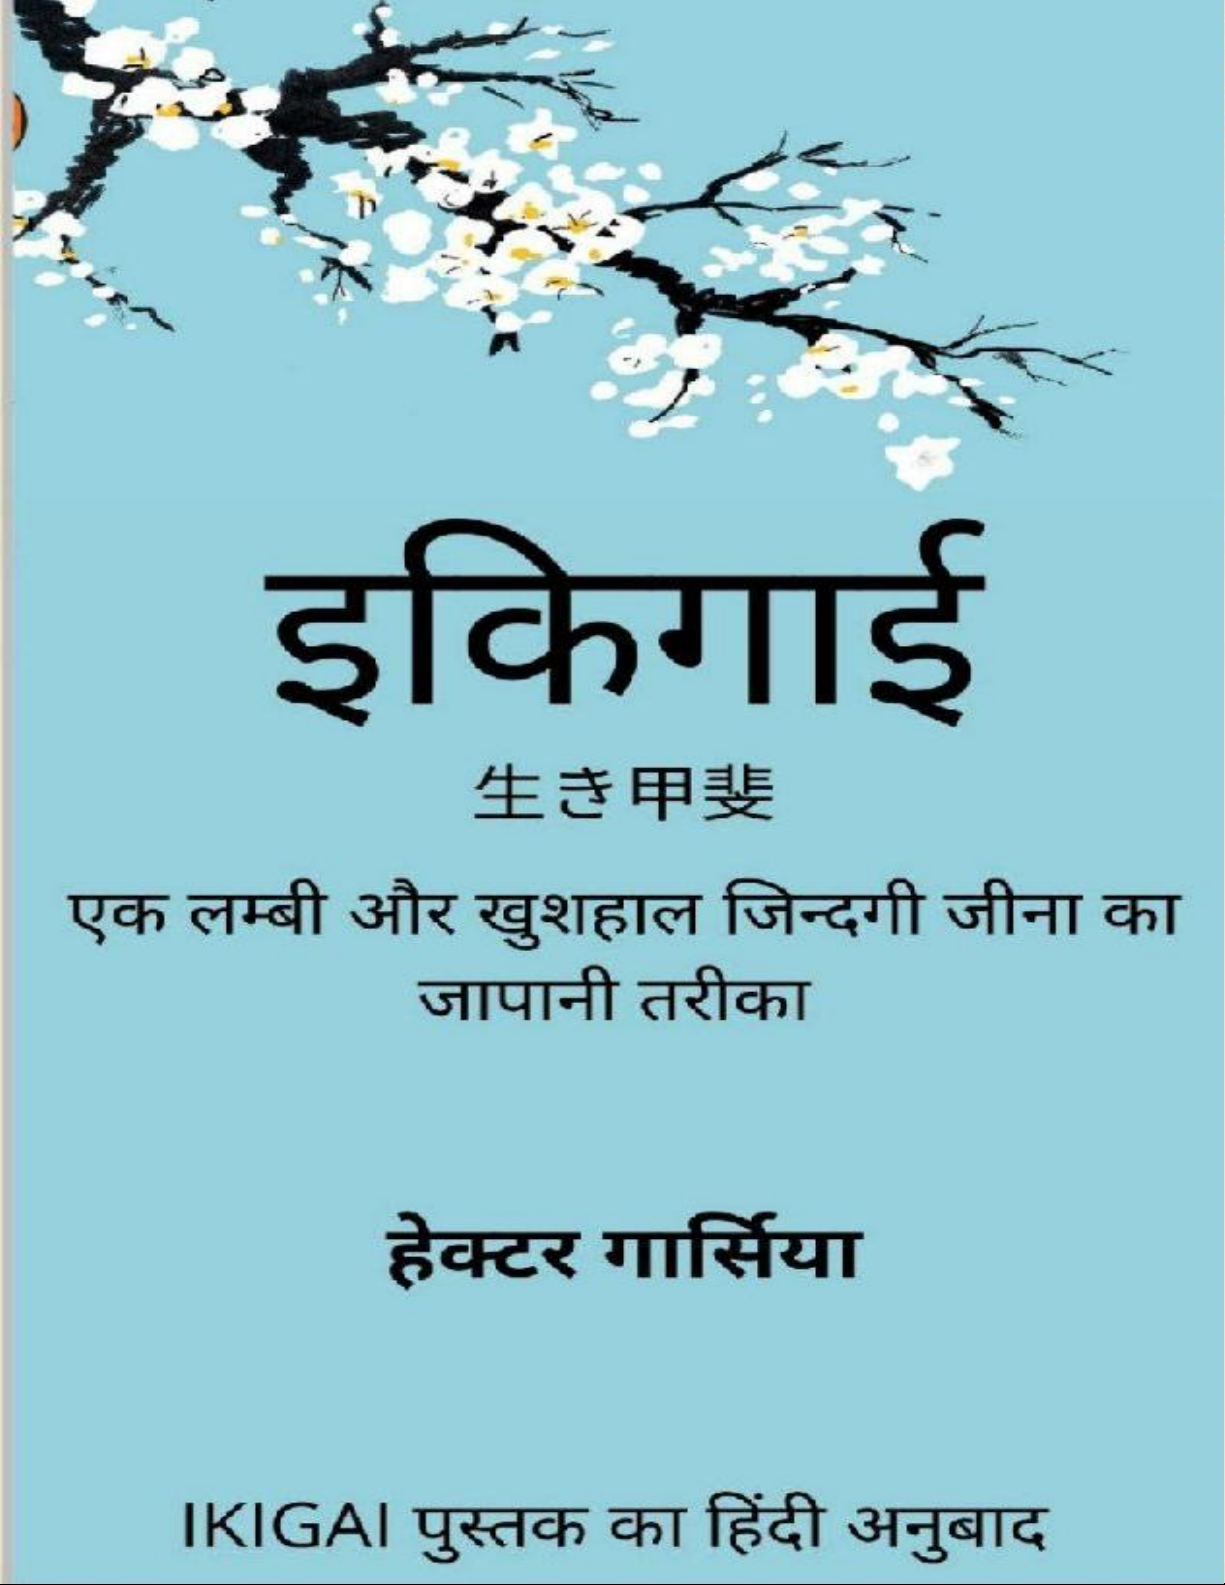 Ikigai - Hindi Translation Of Ikigai